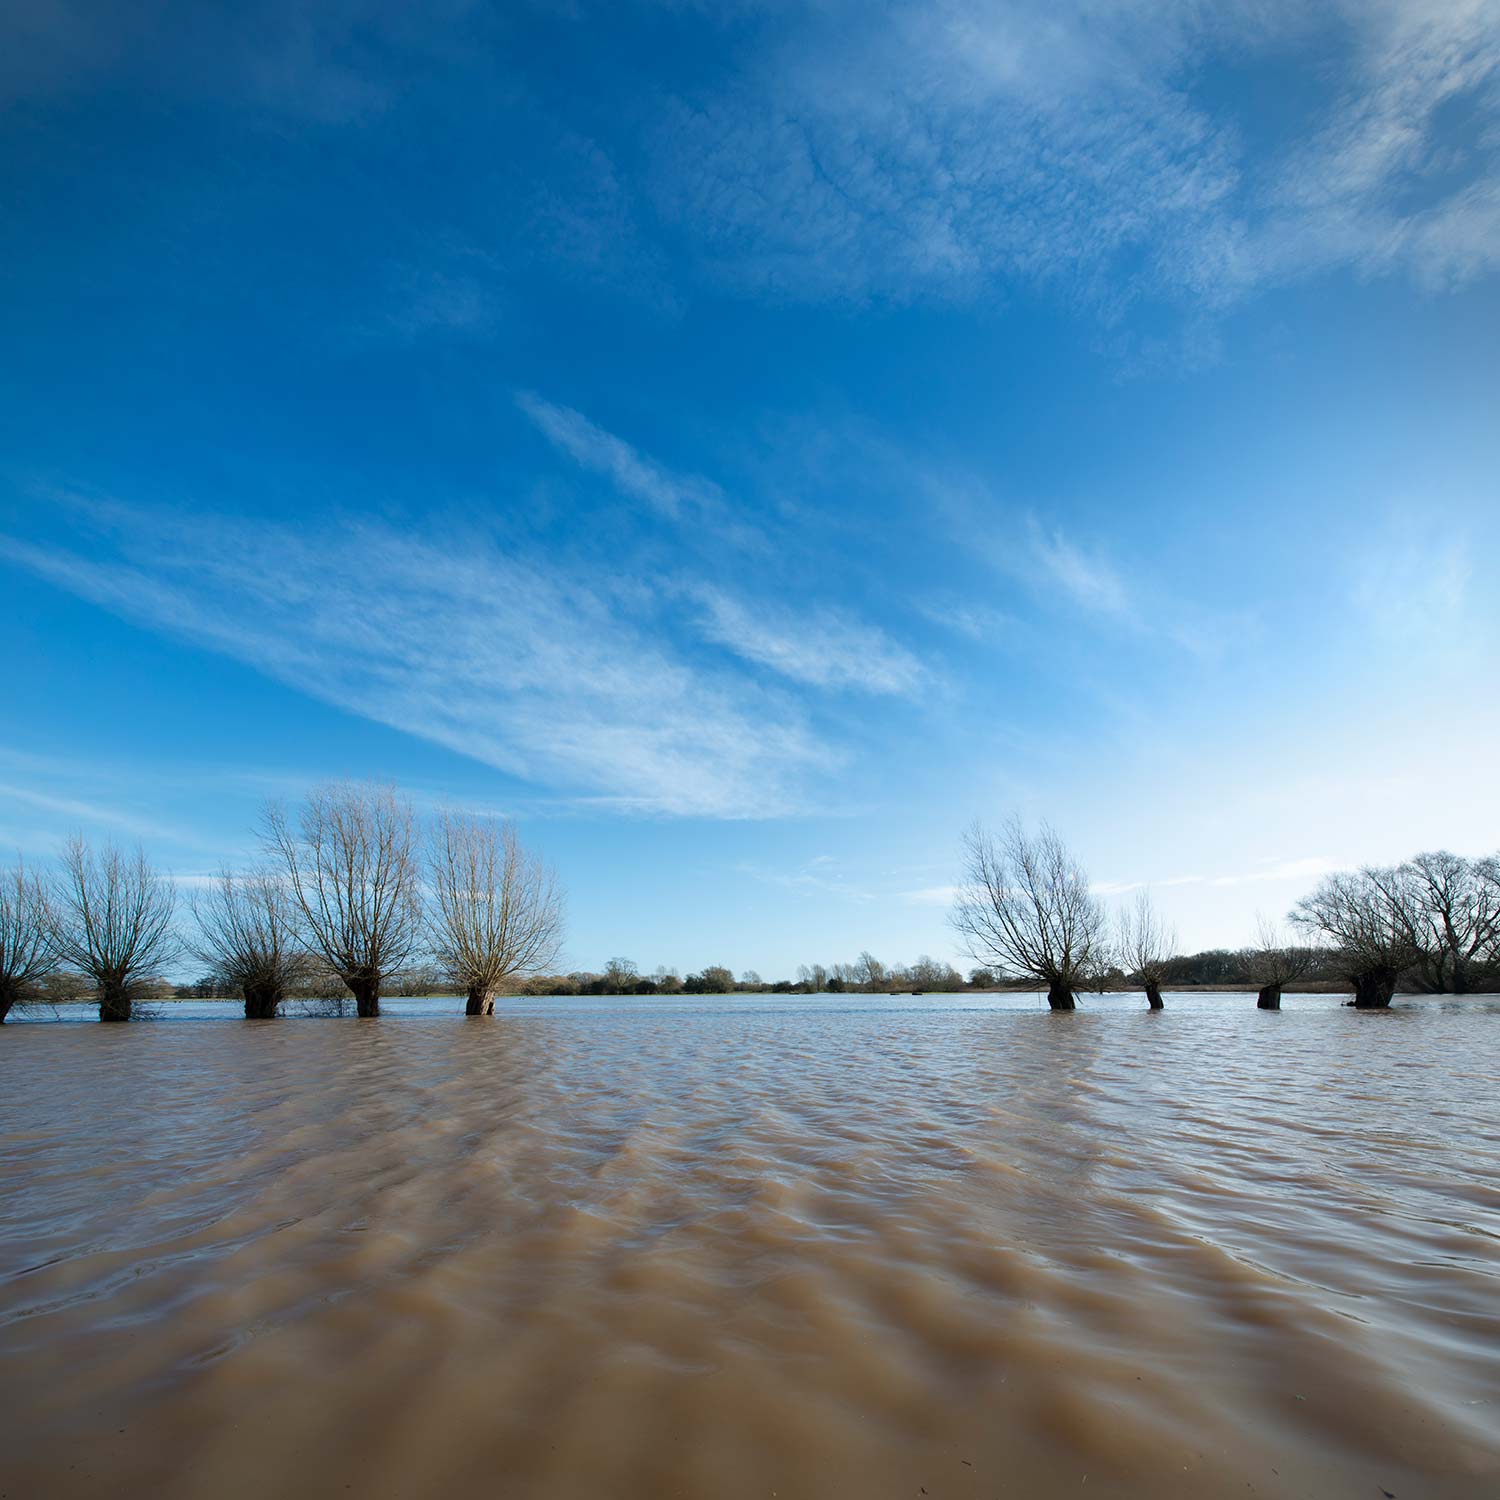 The River Avon in flood, Hampton Lucy, Warwickshire